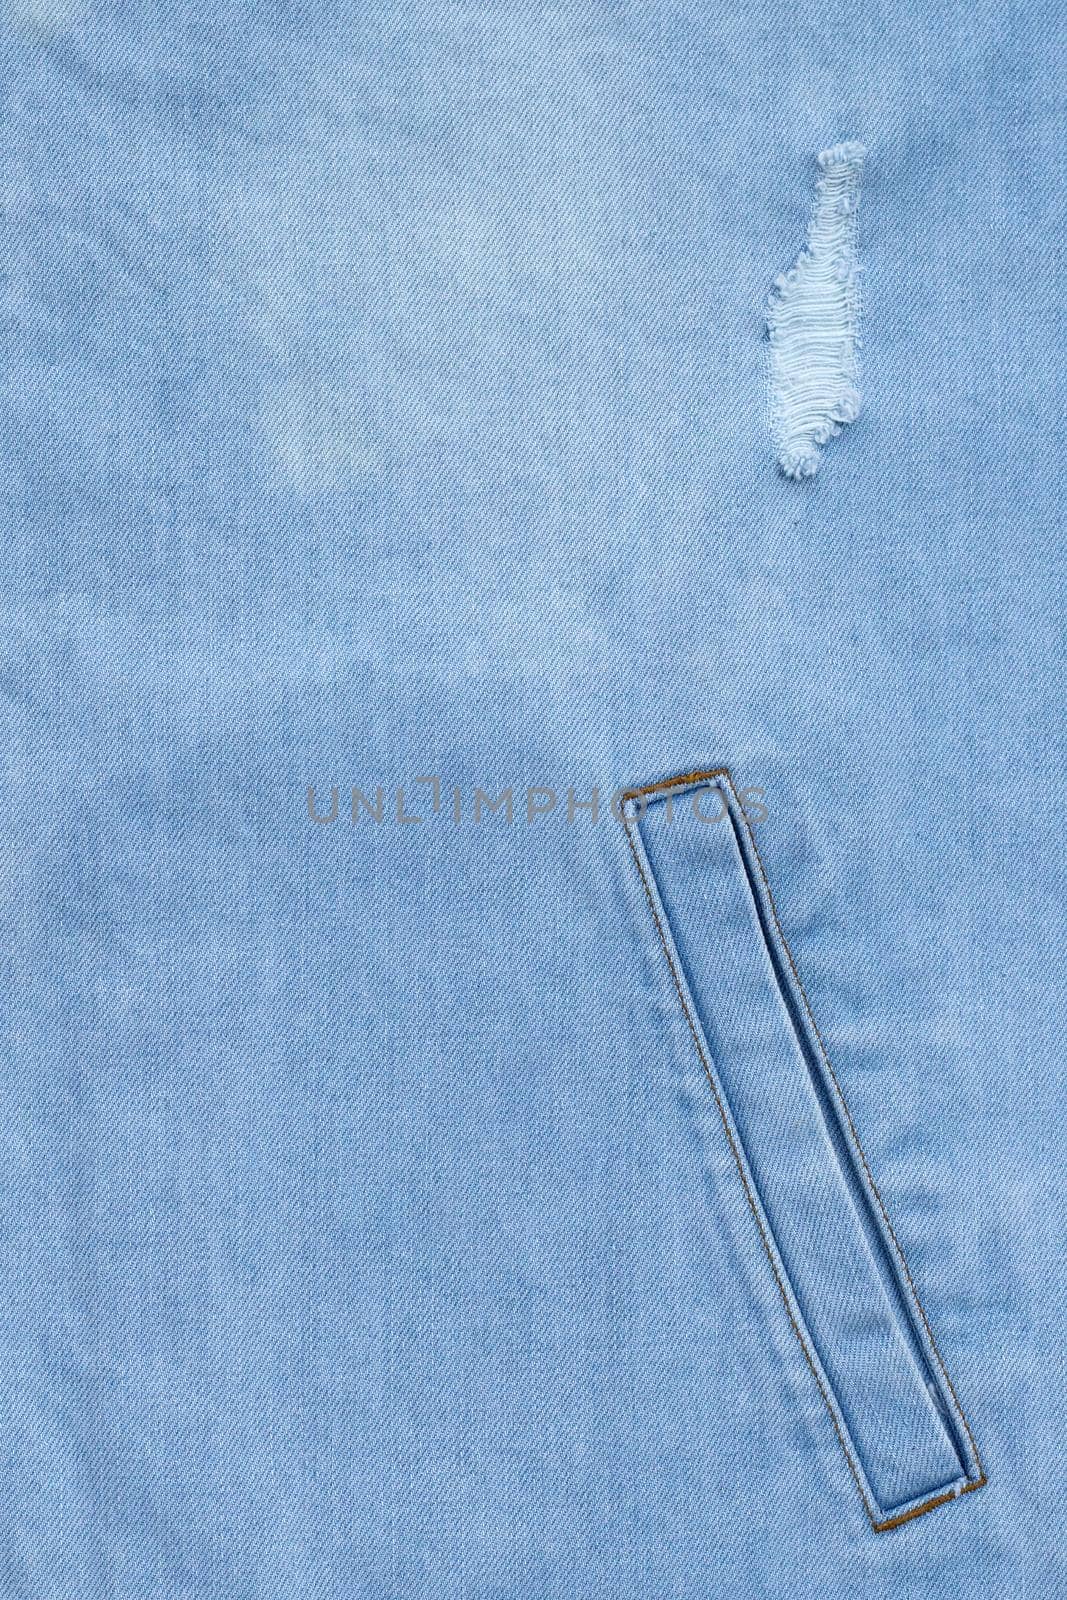 Close up jeans shirt texture. by Bowonpat